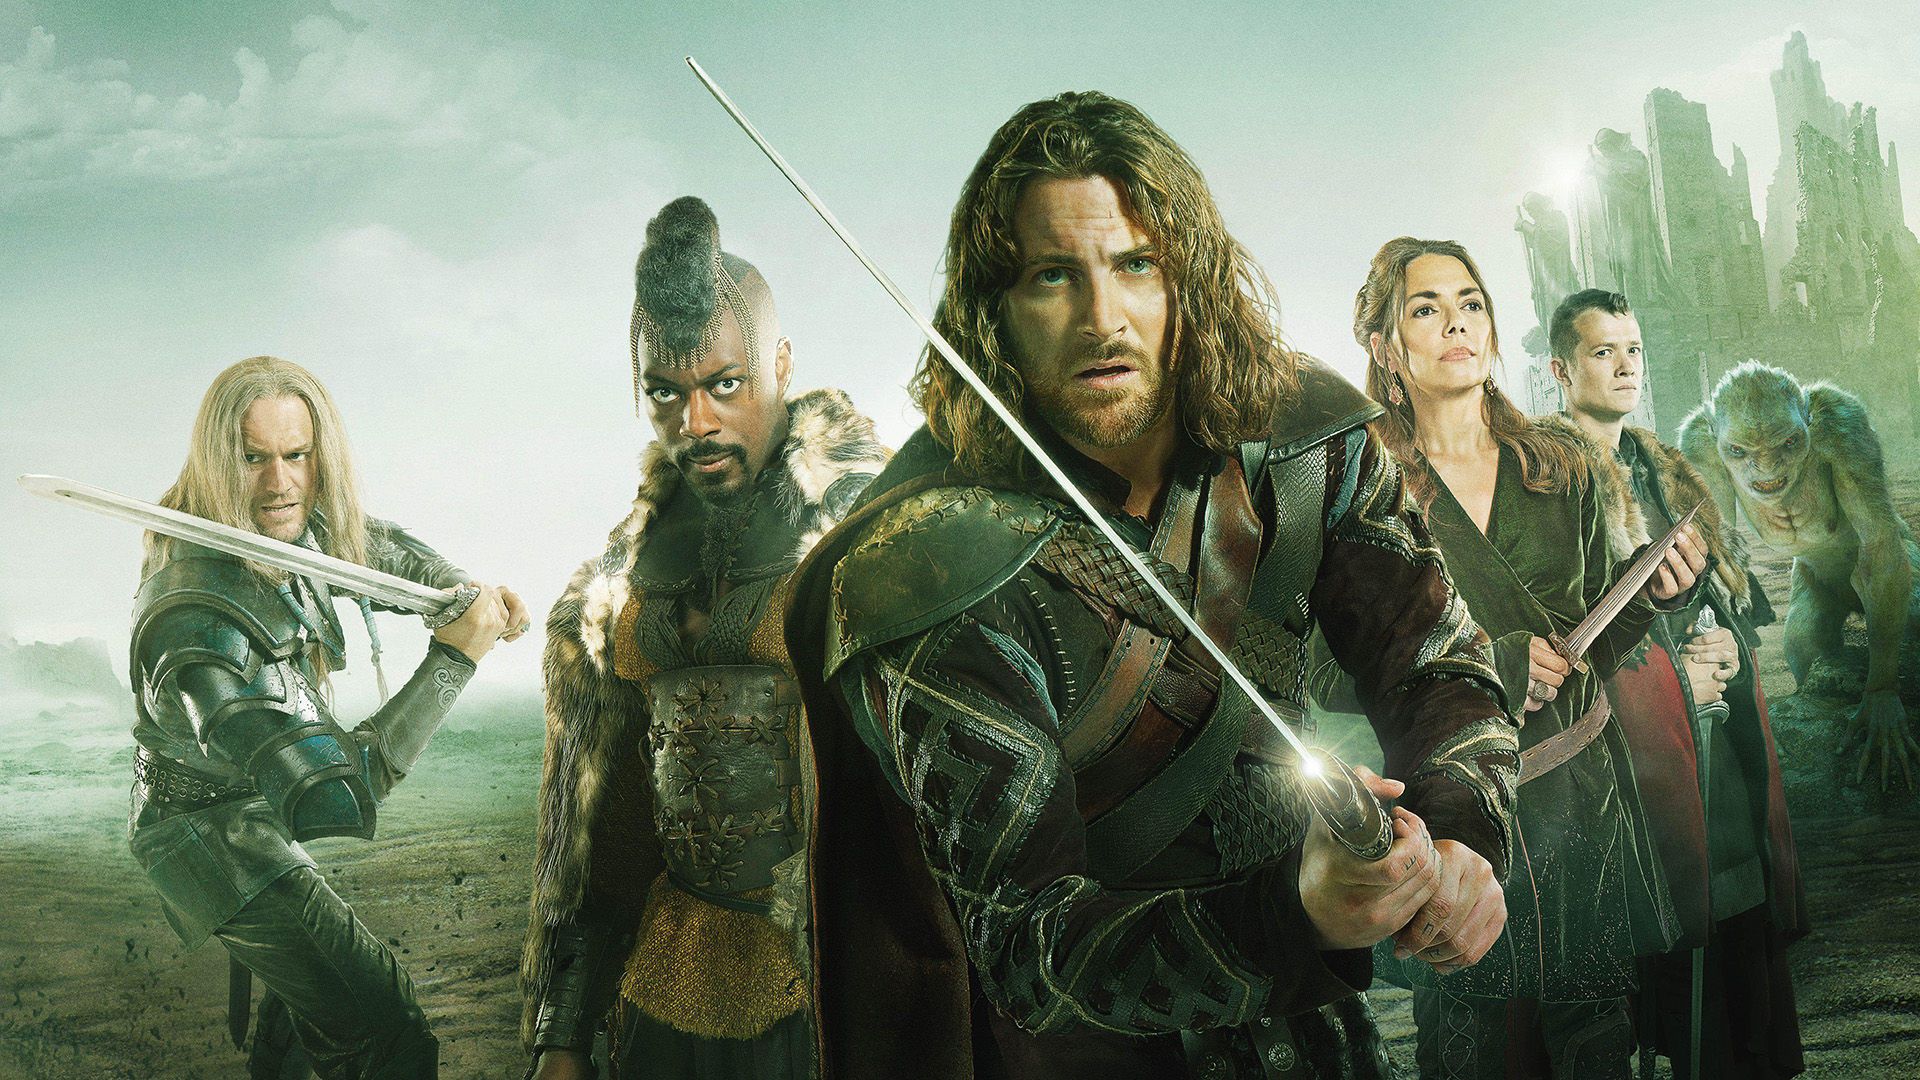 Beowulf: Return to the Shieldlands background